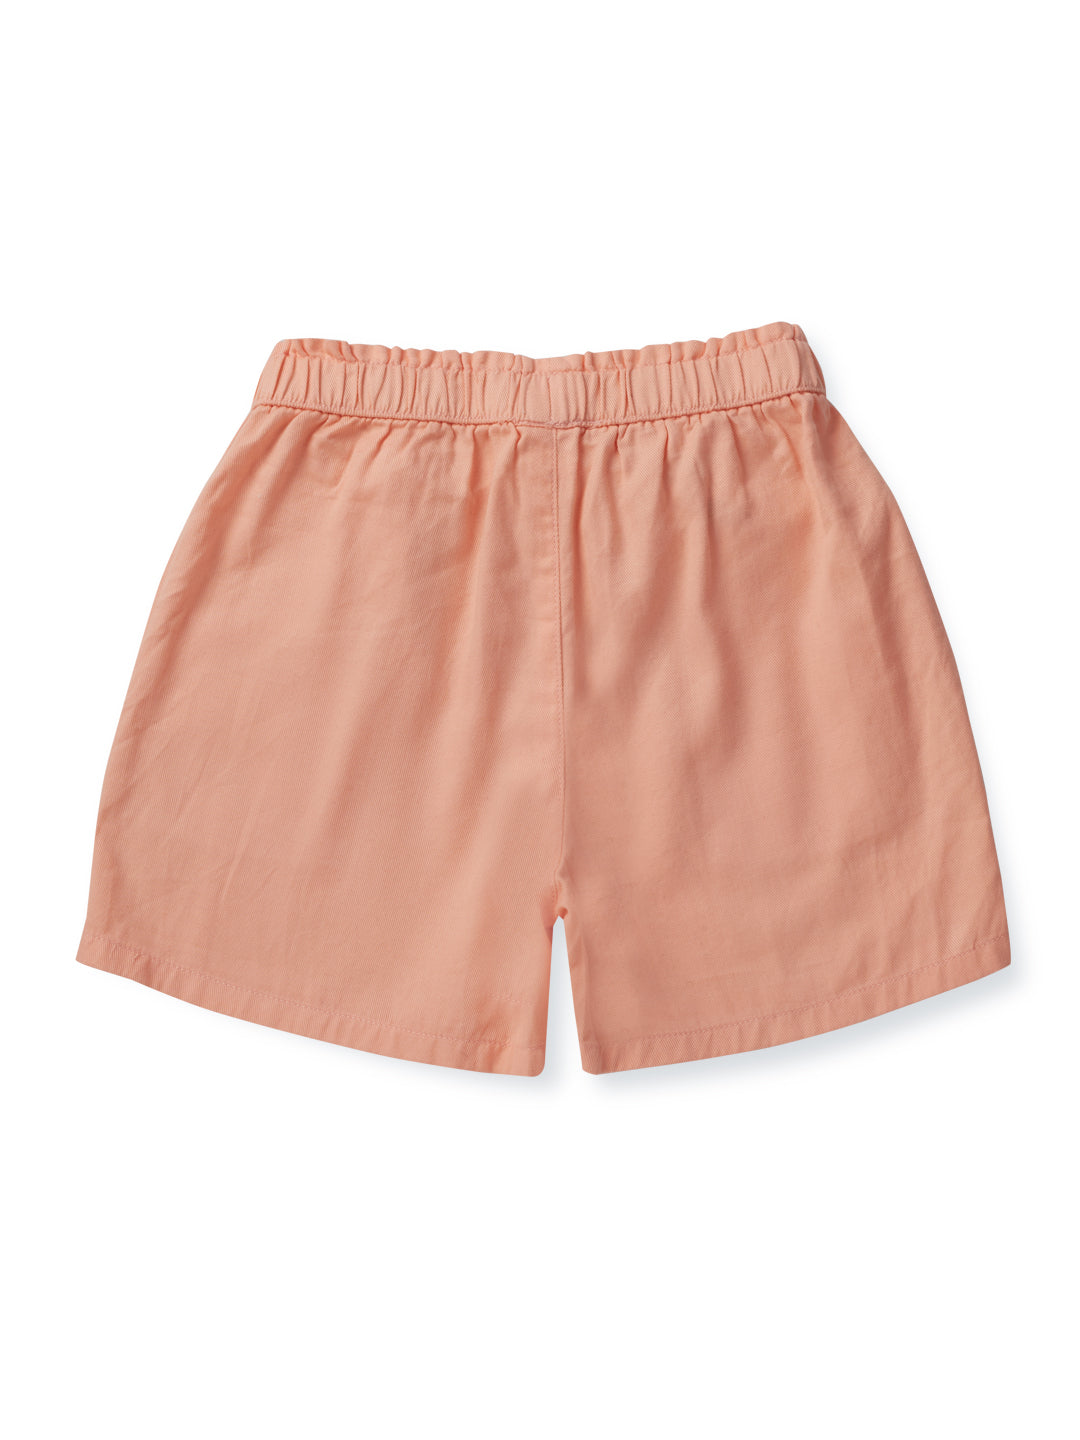 Girls Peach Cotton Solid Shorts